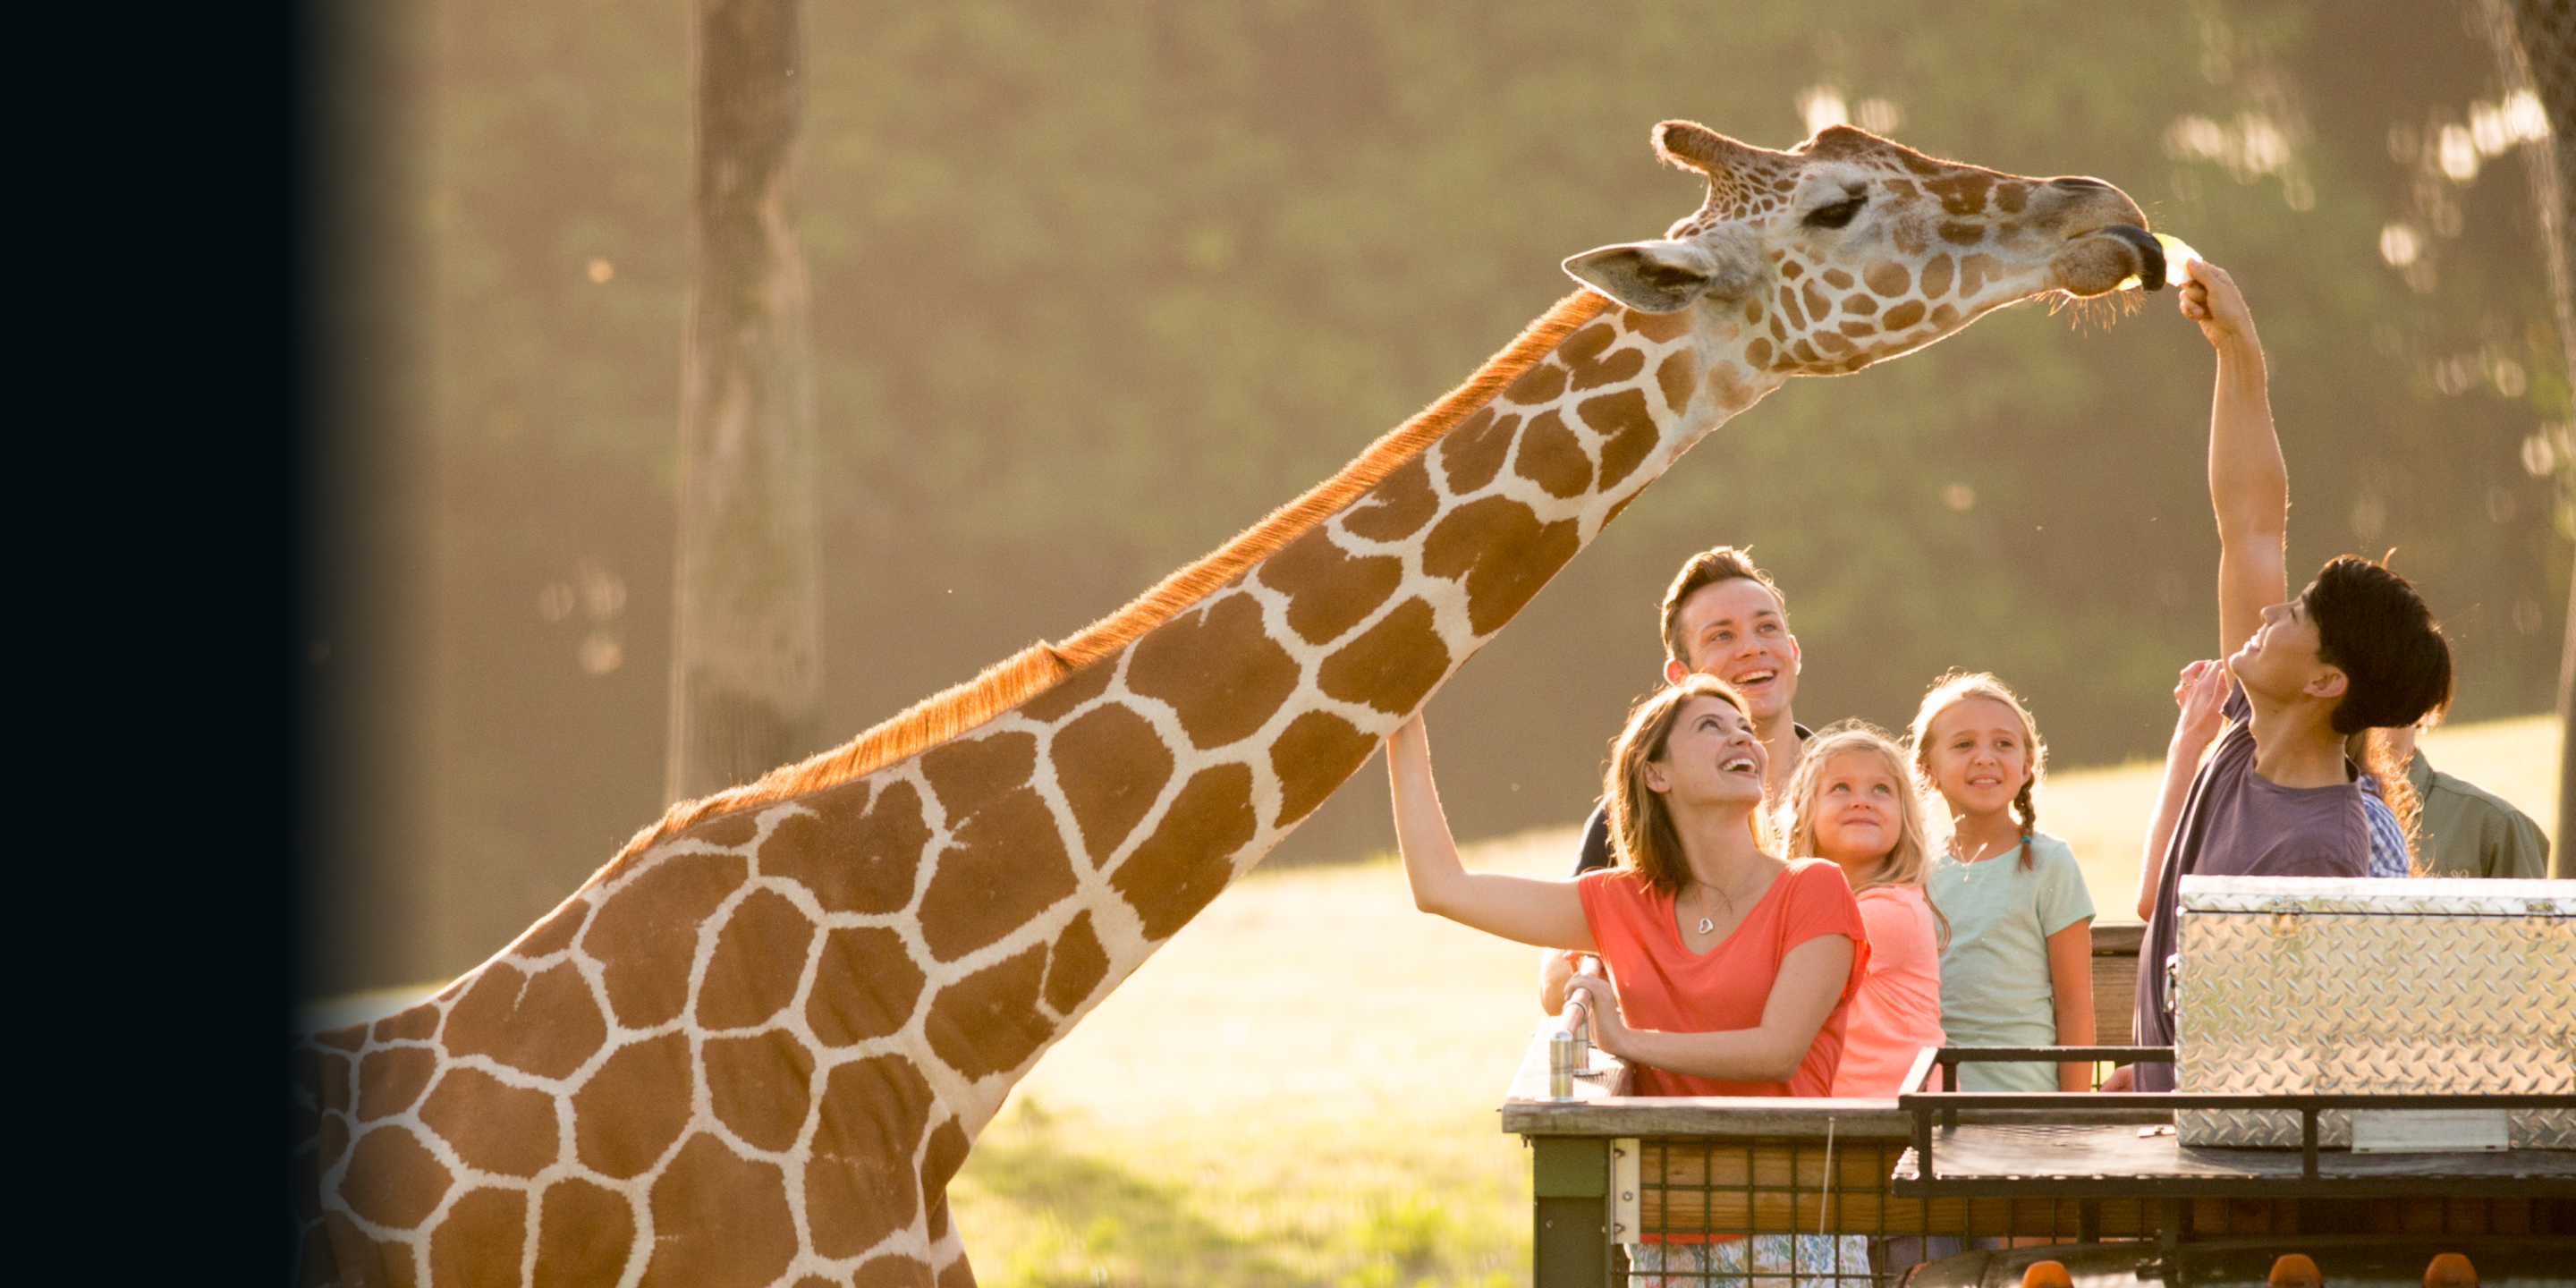 A group of visitors pet & feed a giraffe on the Busch Gardens Serengeti Safari